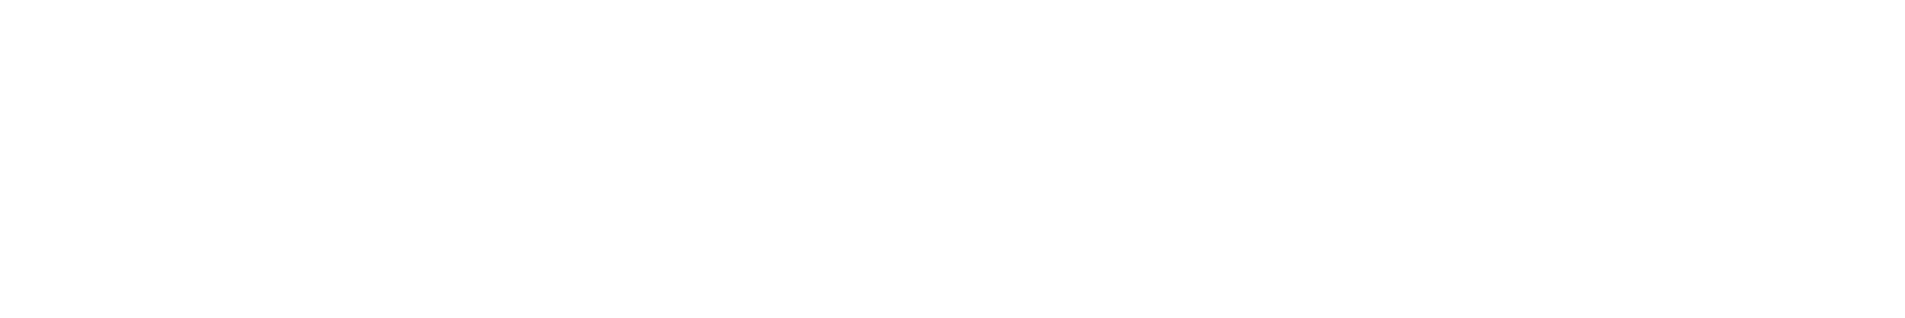 AmTrust Logo - Legal Expenses Insurance s1206 | AmTrust at Lloyd's